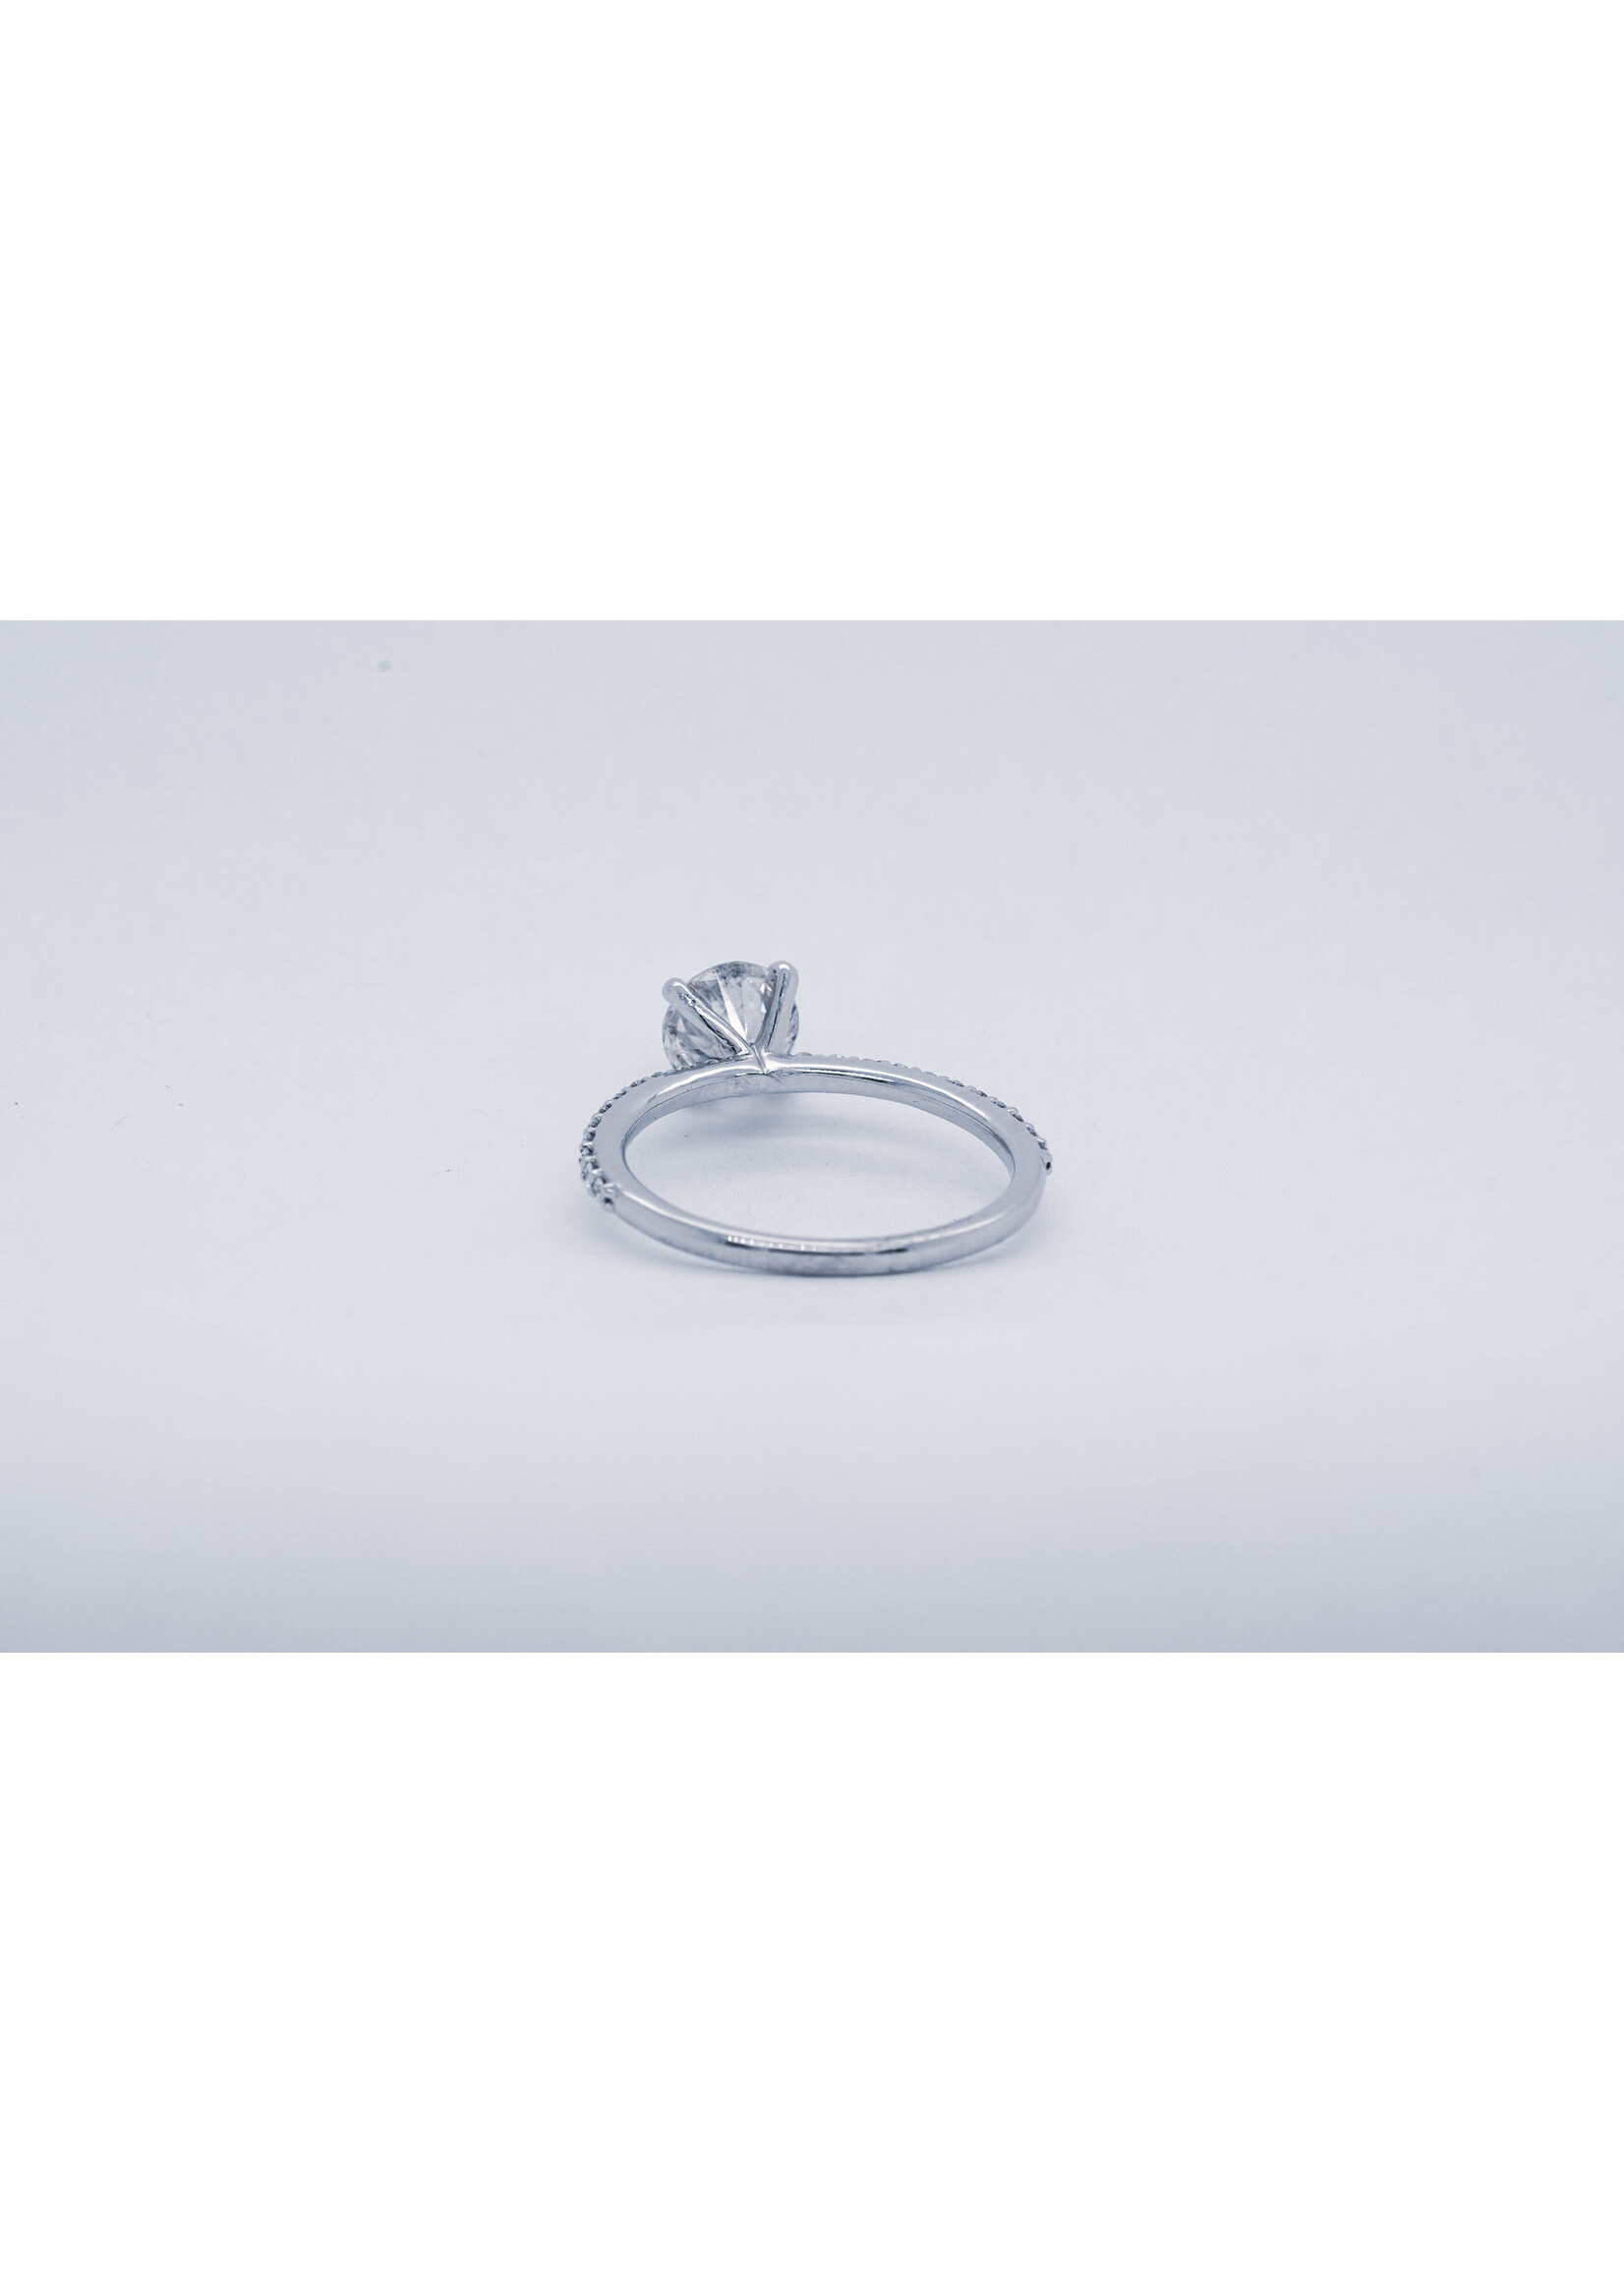 Plat 3.09g 1.23ctw (1.01ctr) H/SI2 Round Diamond Engagement Ring (size 7)